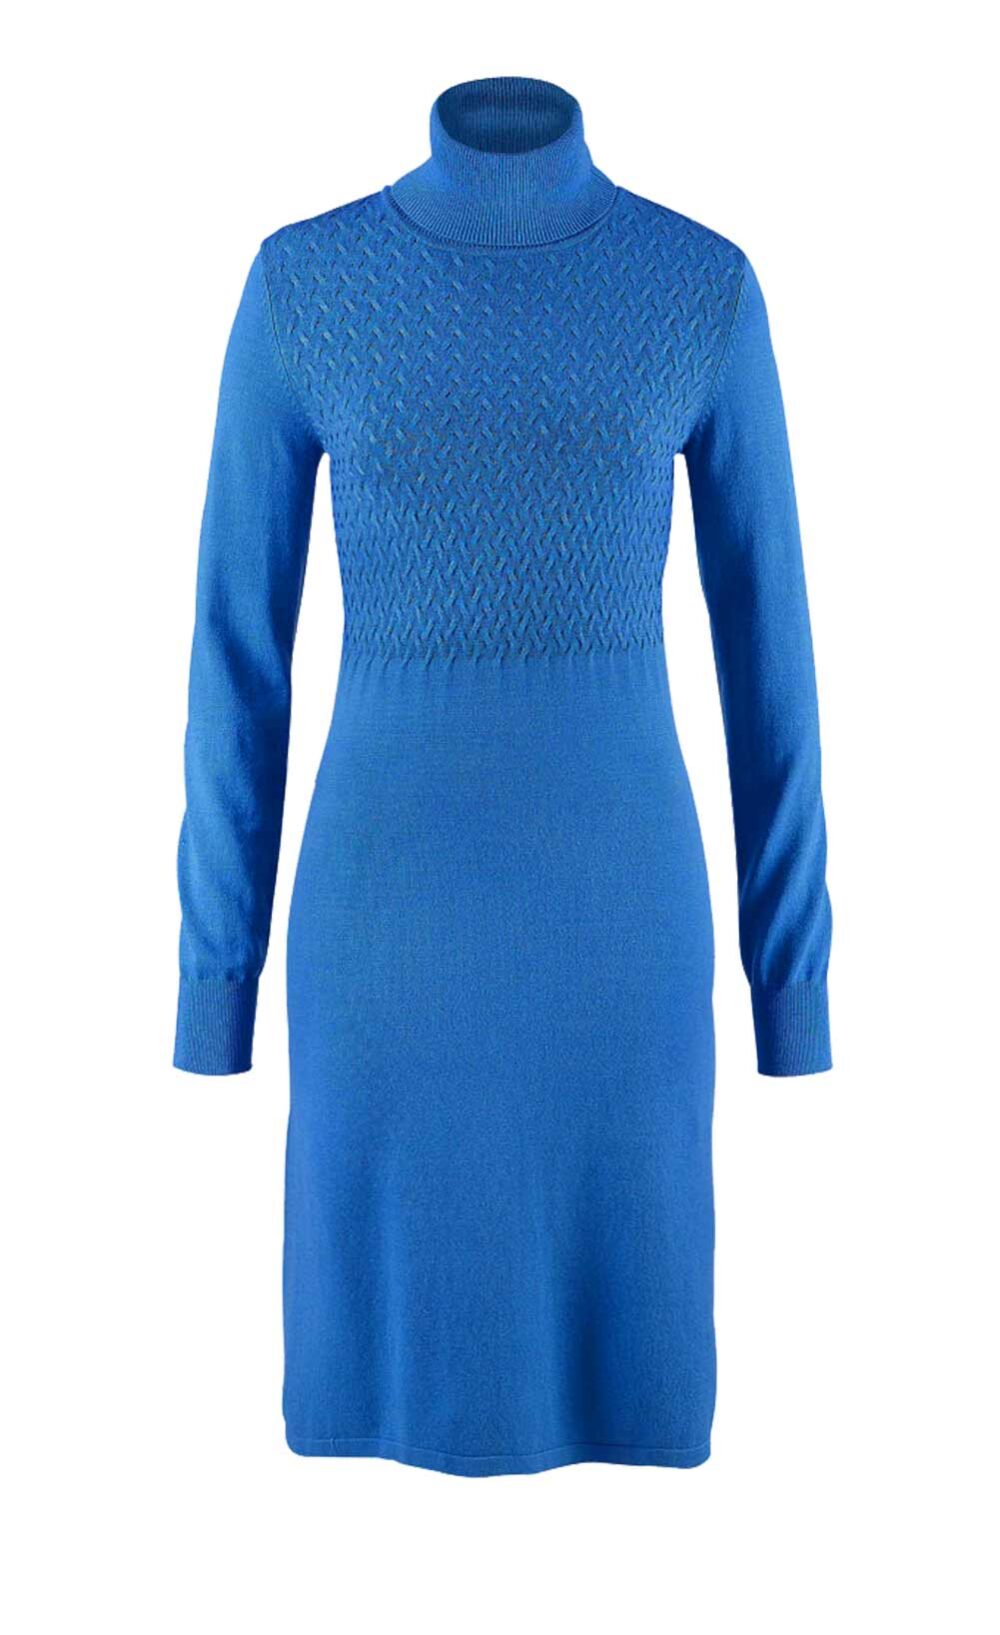 Damen-Strickkleid Blau Rollkragenkleid Kleid Rolli Marine Winterkleid Herbst missforty